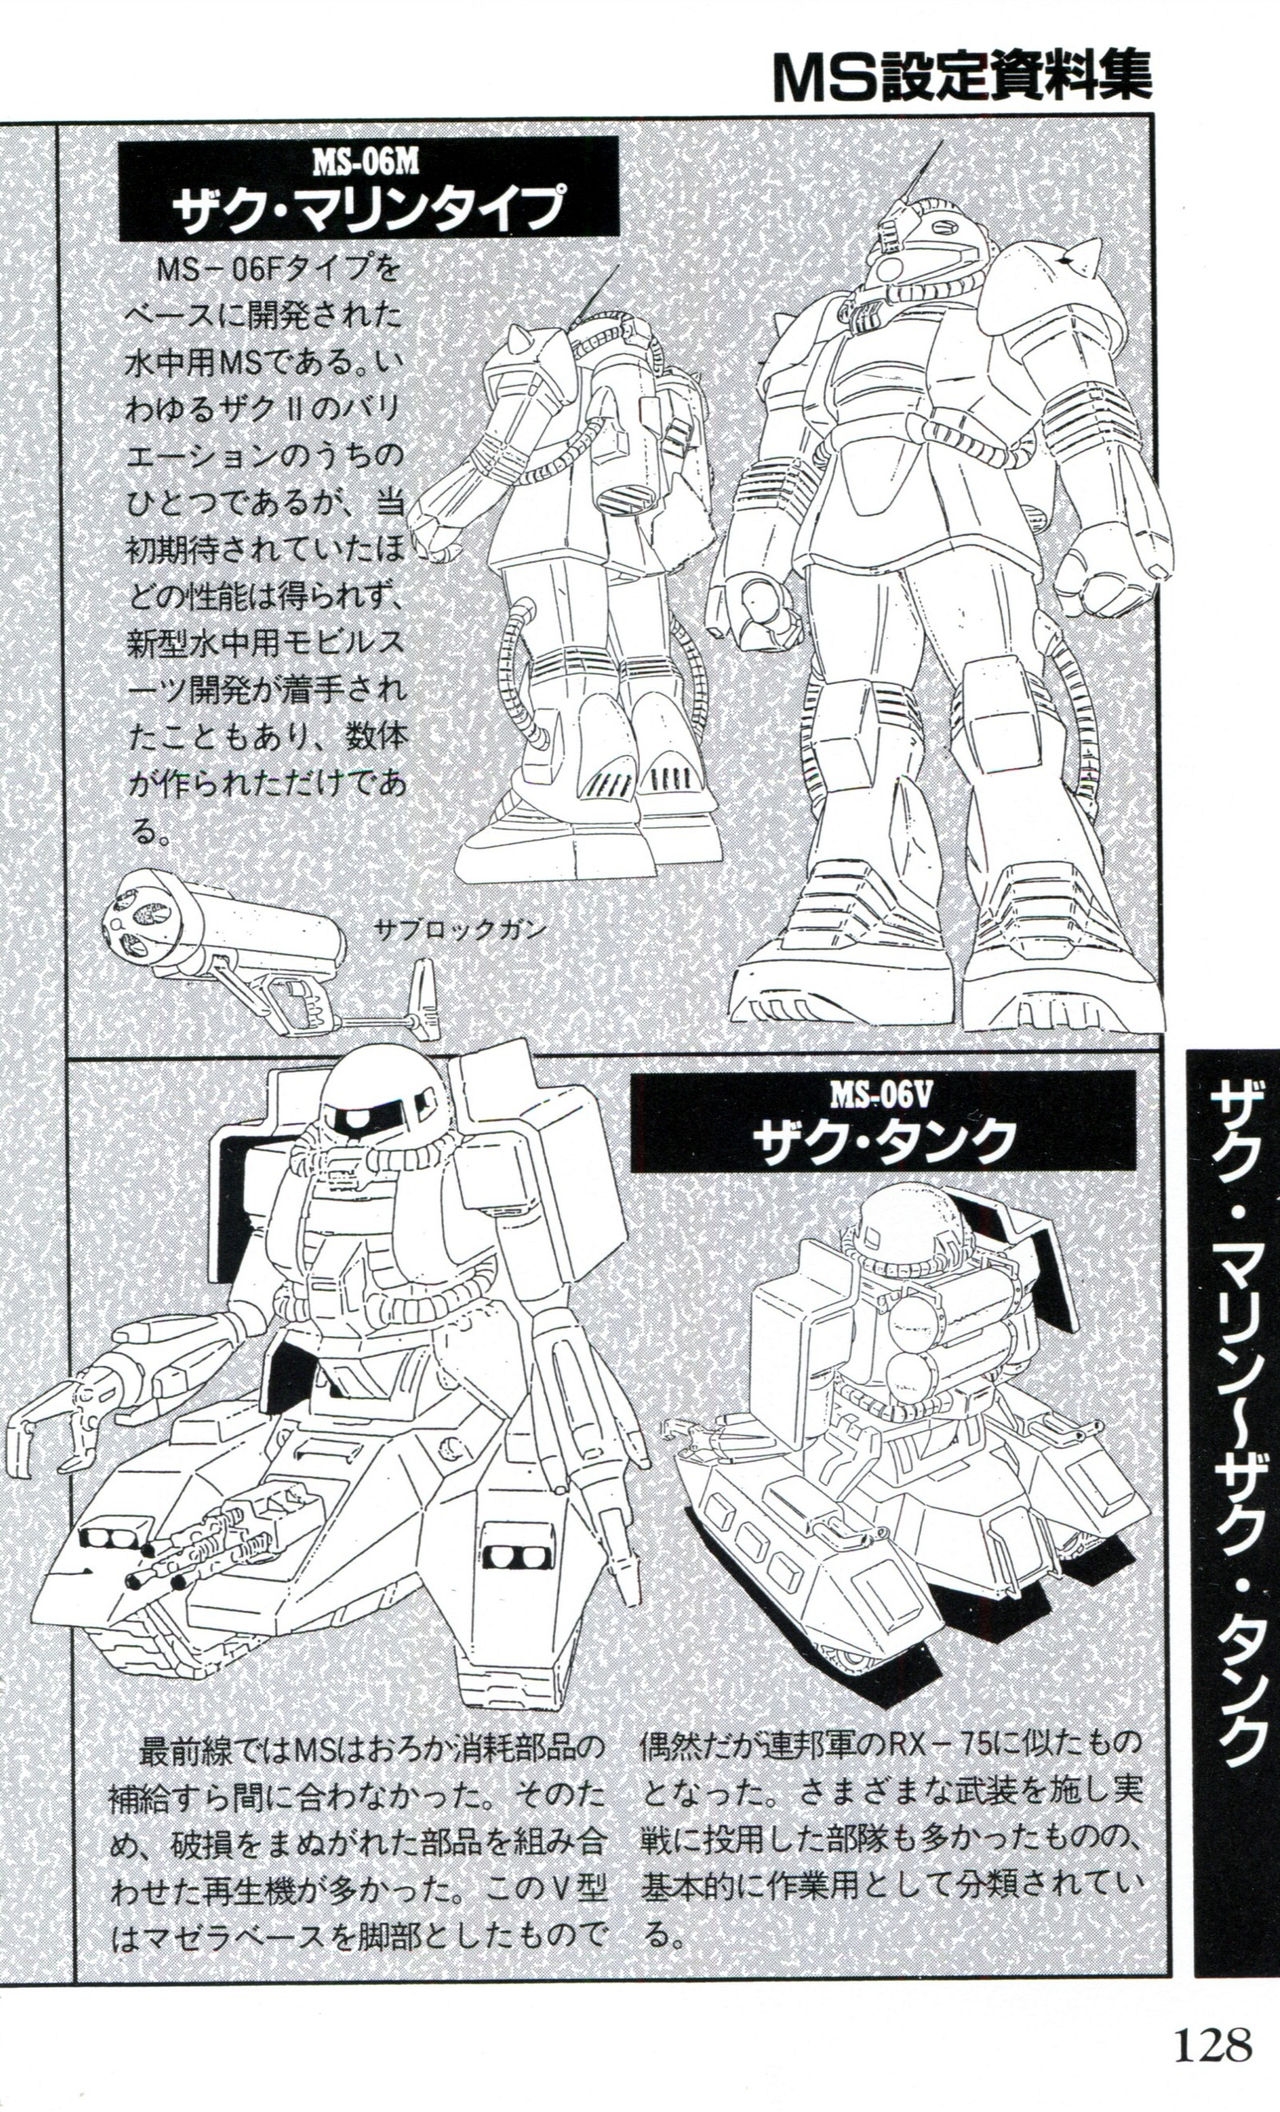 Mobile Suit Gundam U.C. Box MS Gundam Encyclopedia NO.01 - Mobile Suit Gundam 127